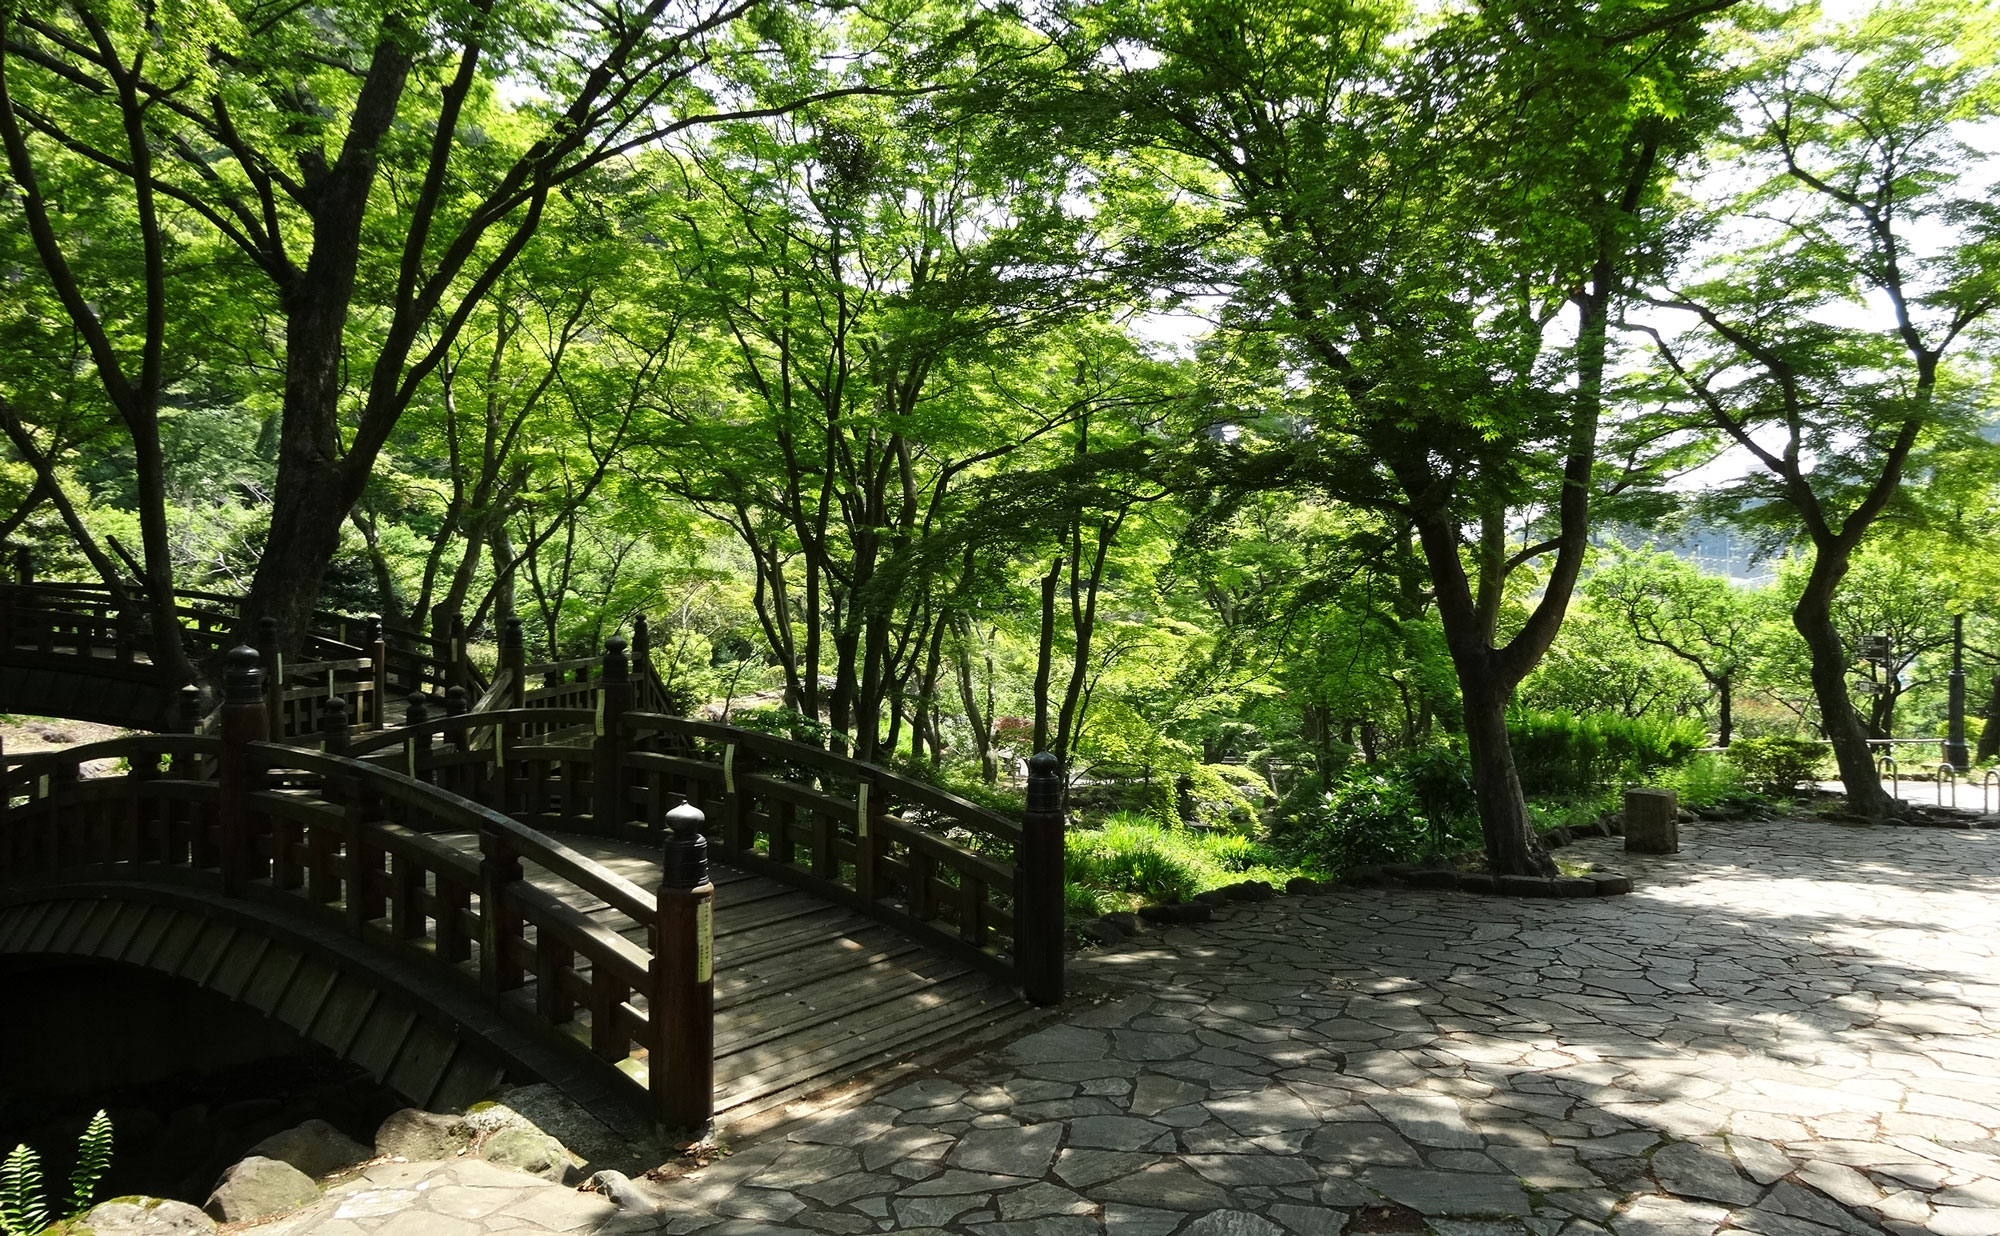 Atami plum garden bridge